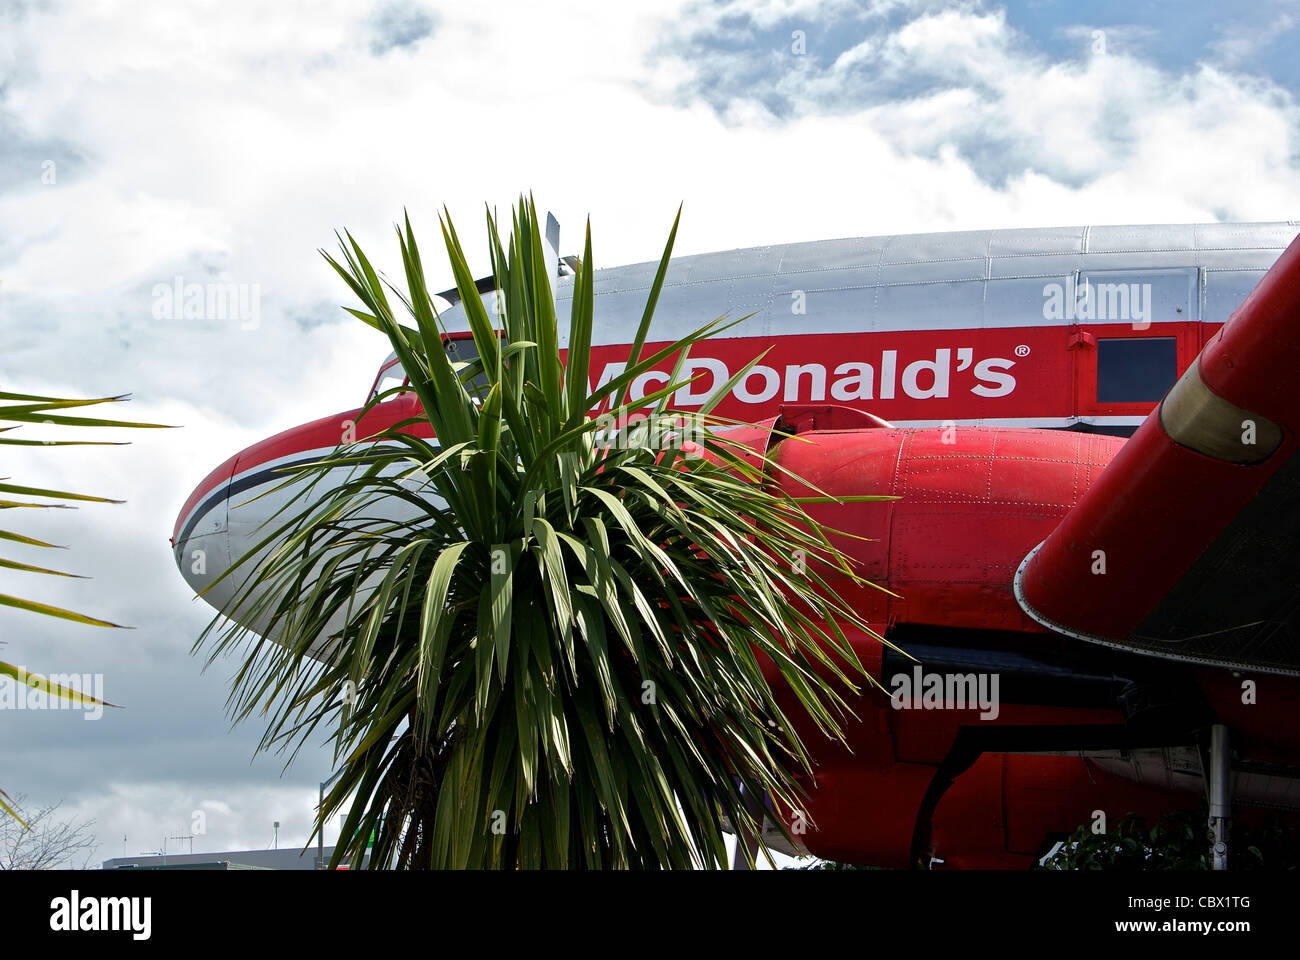 Salvaged DC3 aircraft at McDonald's Restaurant playground Lake Taupo New Zealand Stock Photo